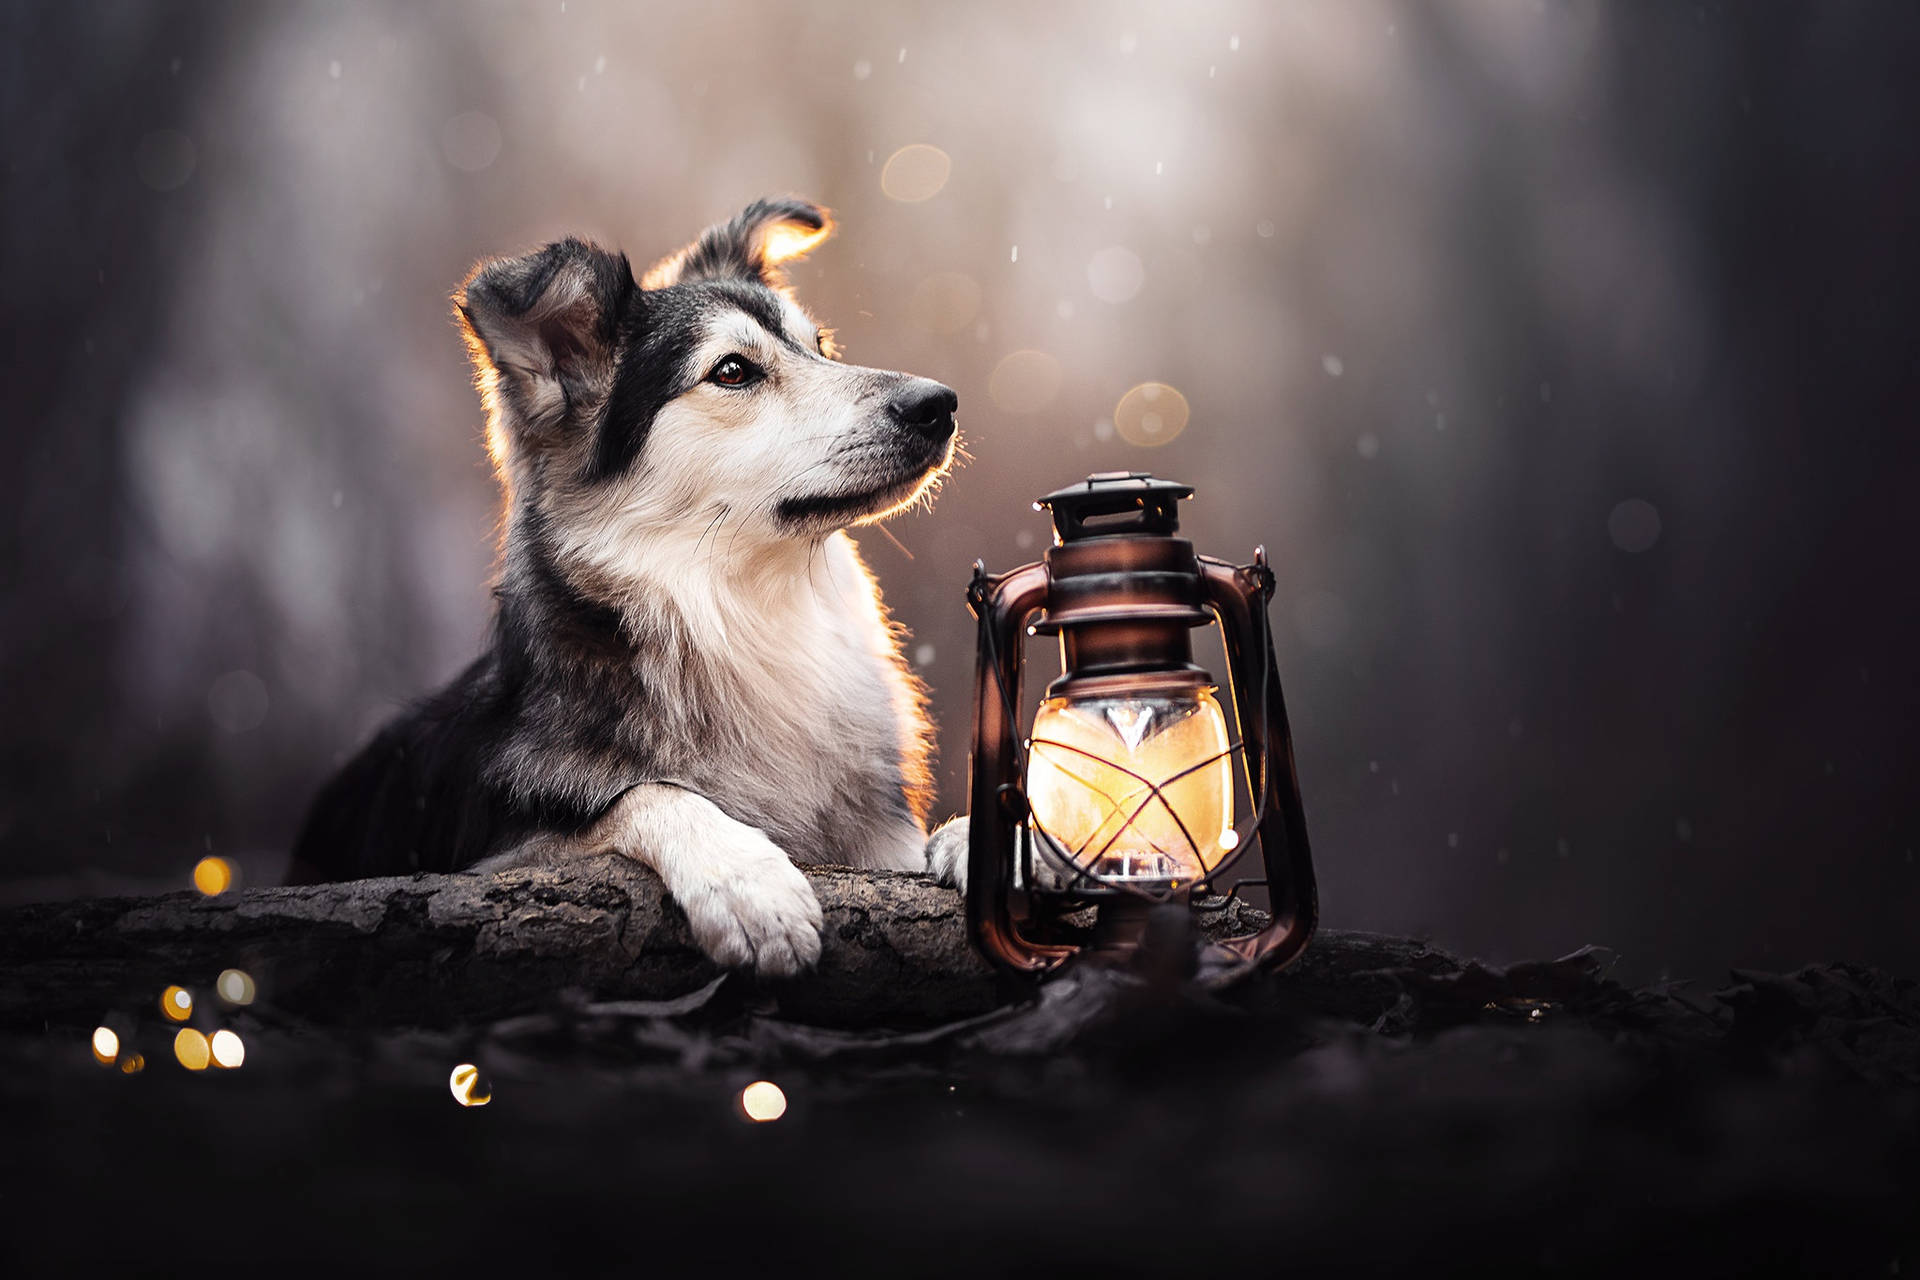 Cute Puppy With Lantern